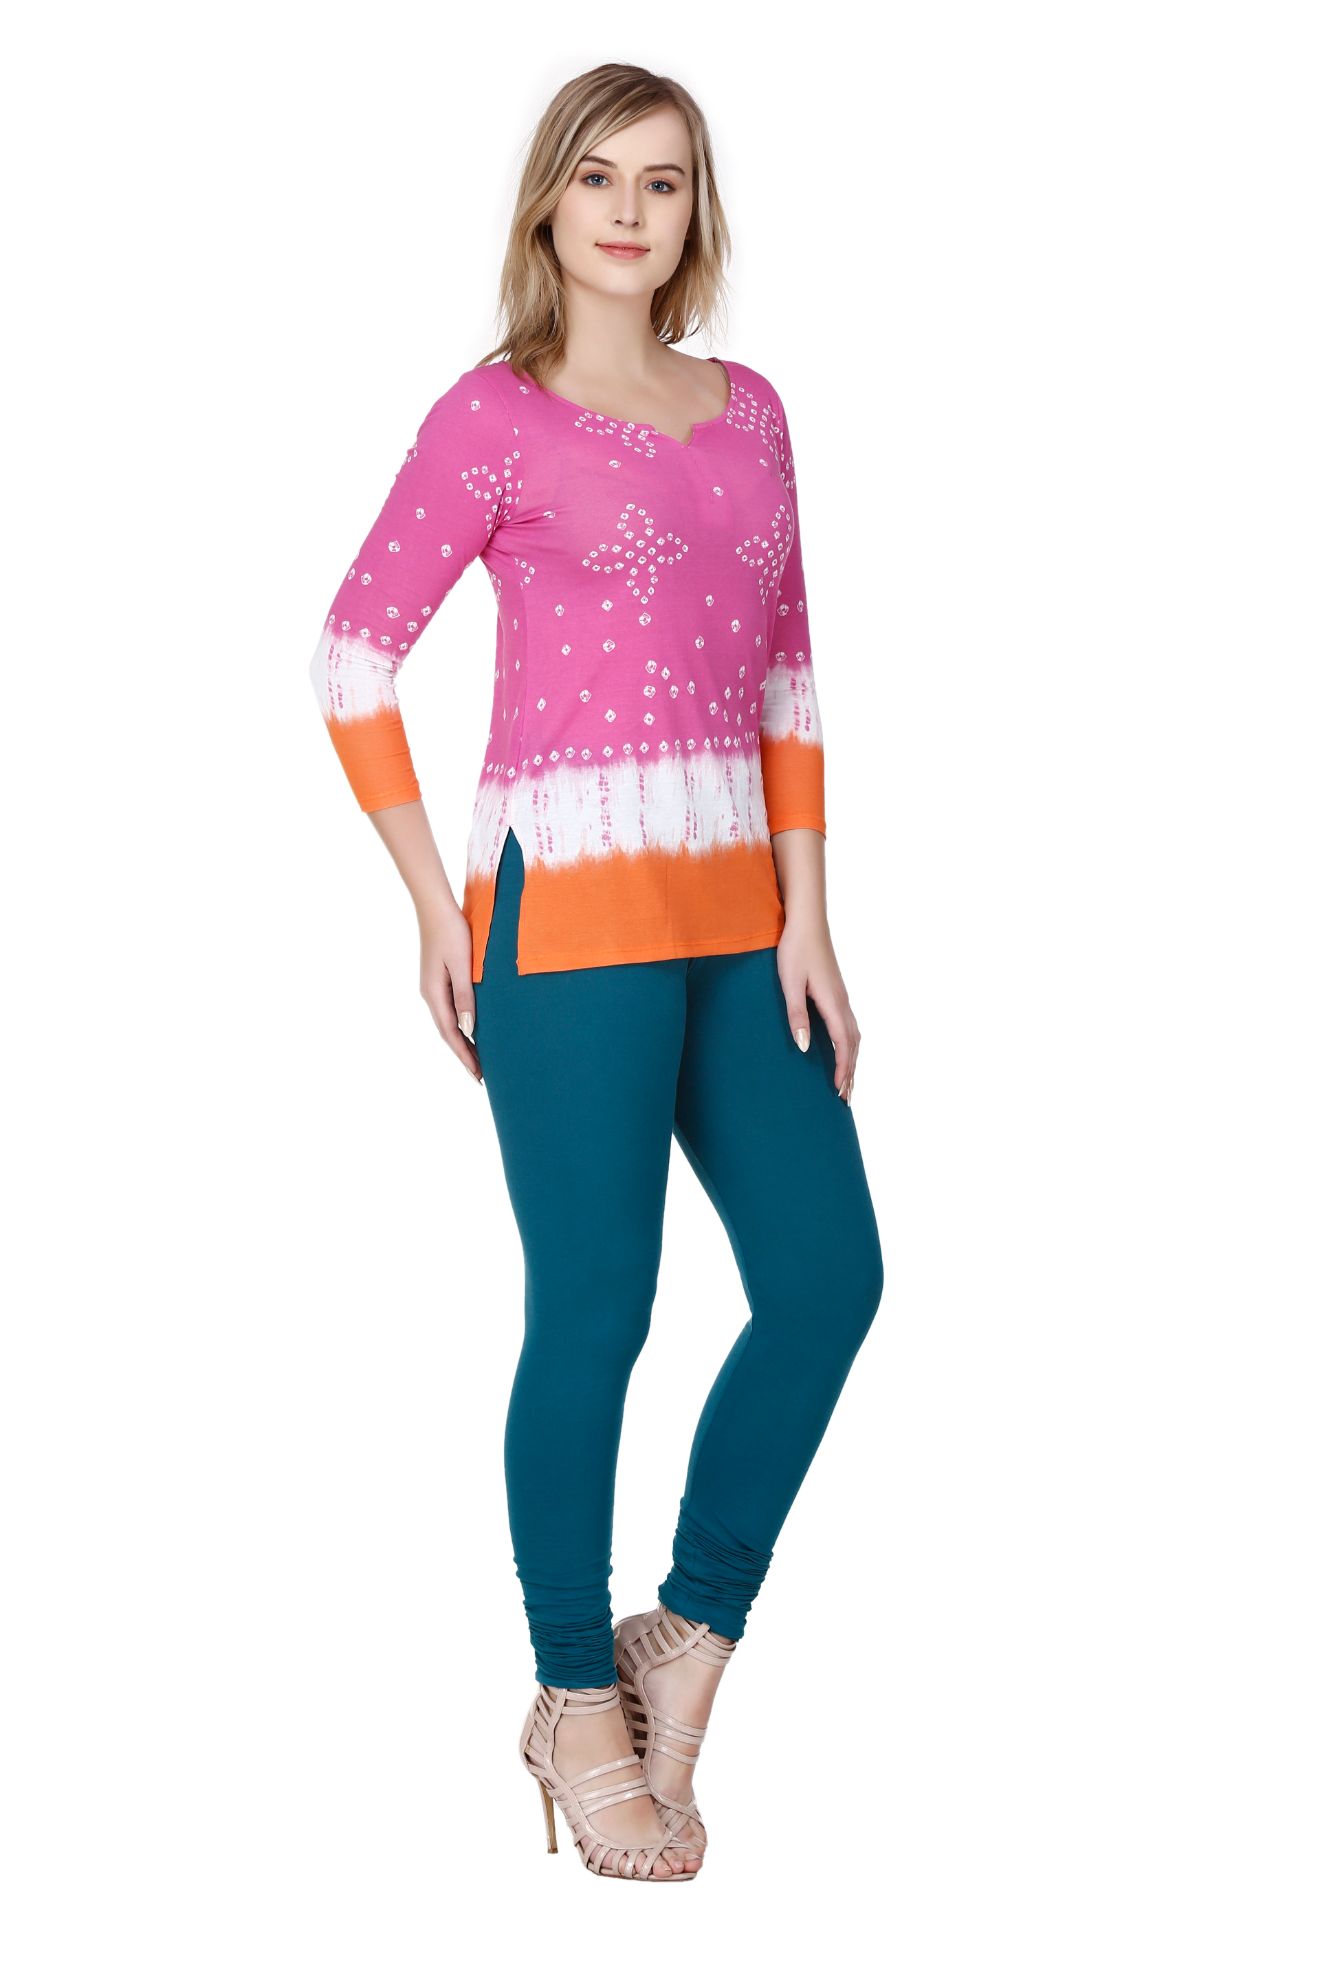 Buy WoMenLi Plus Size Women Cotton Lycra Churidar Leggings Pack of 5  (Small) Multicolour at Amazon.in